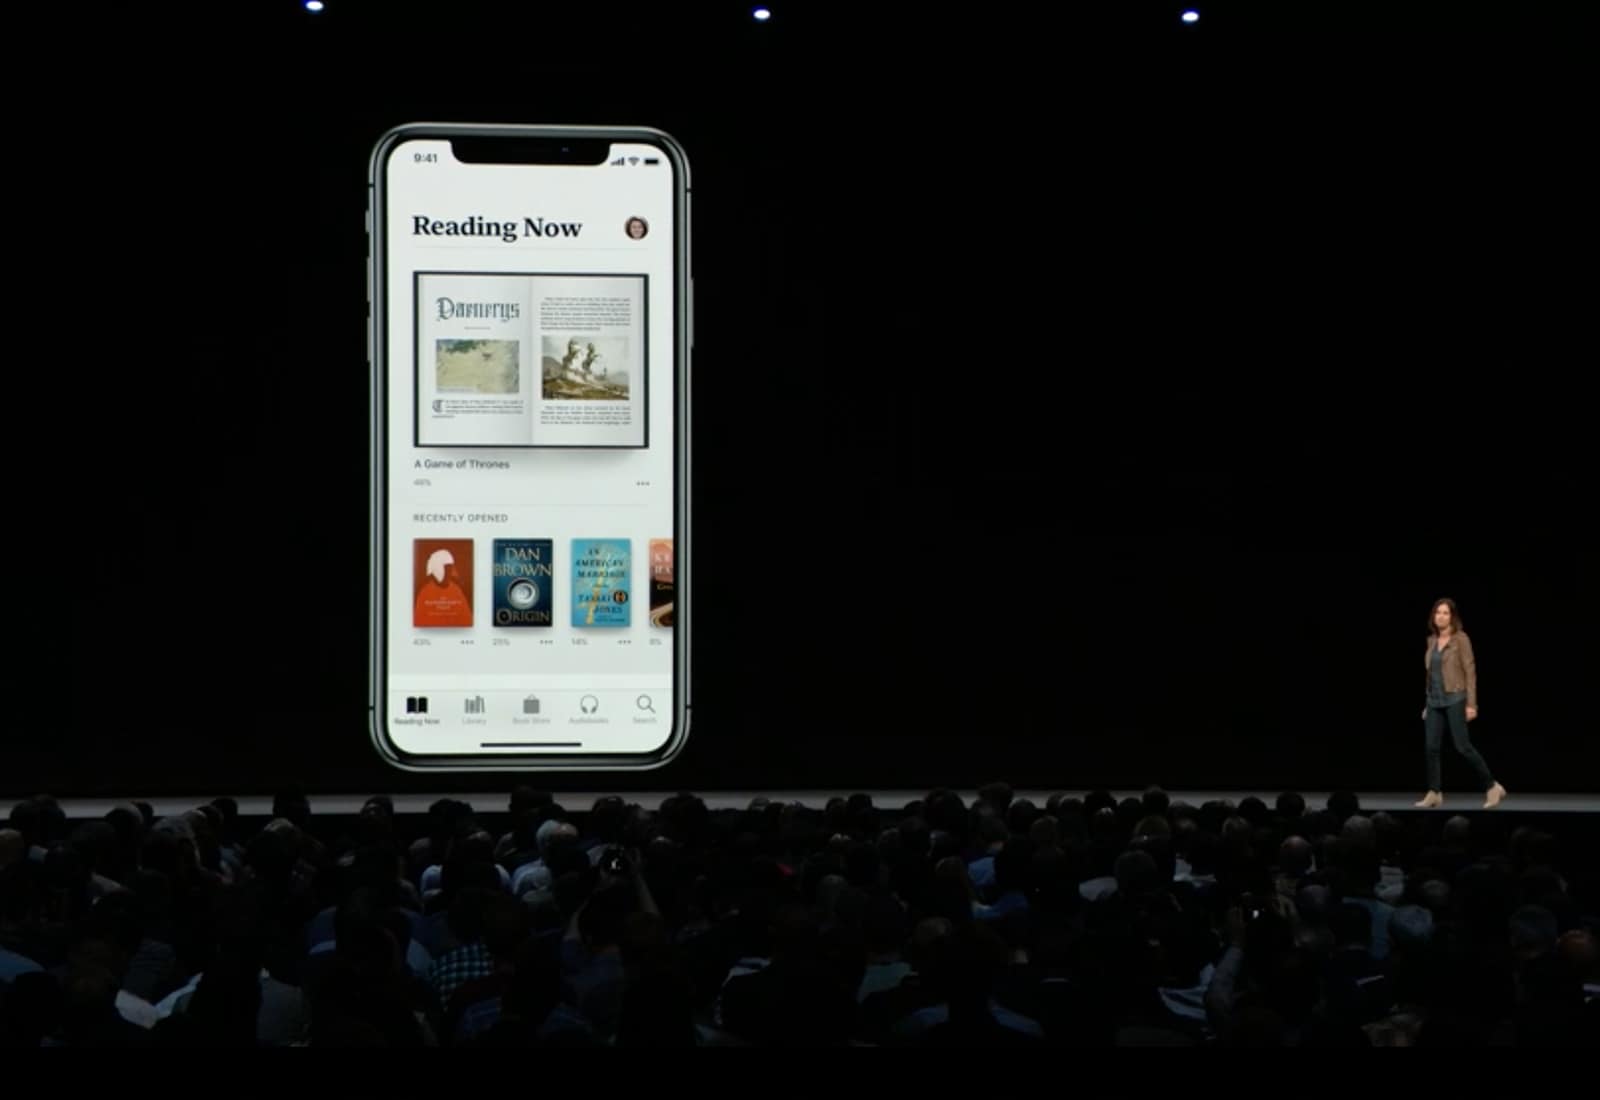 Apple Books iOS 12